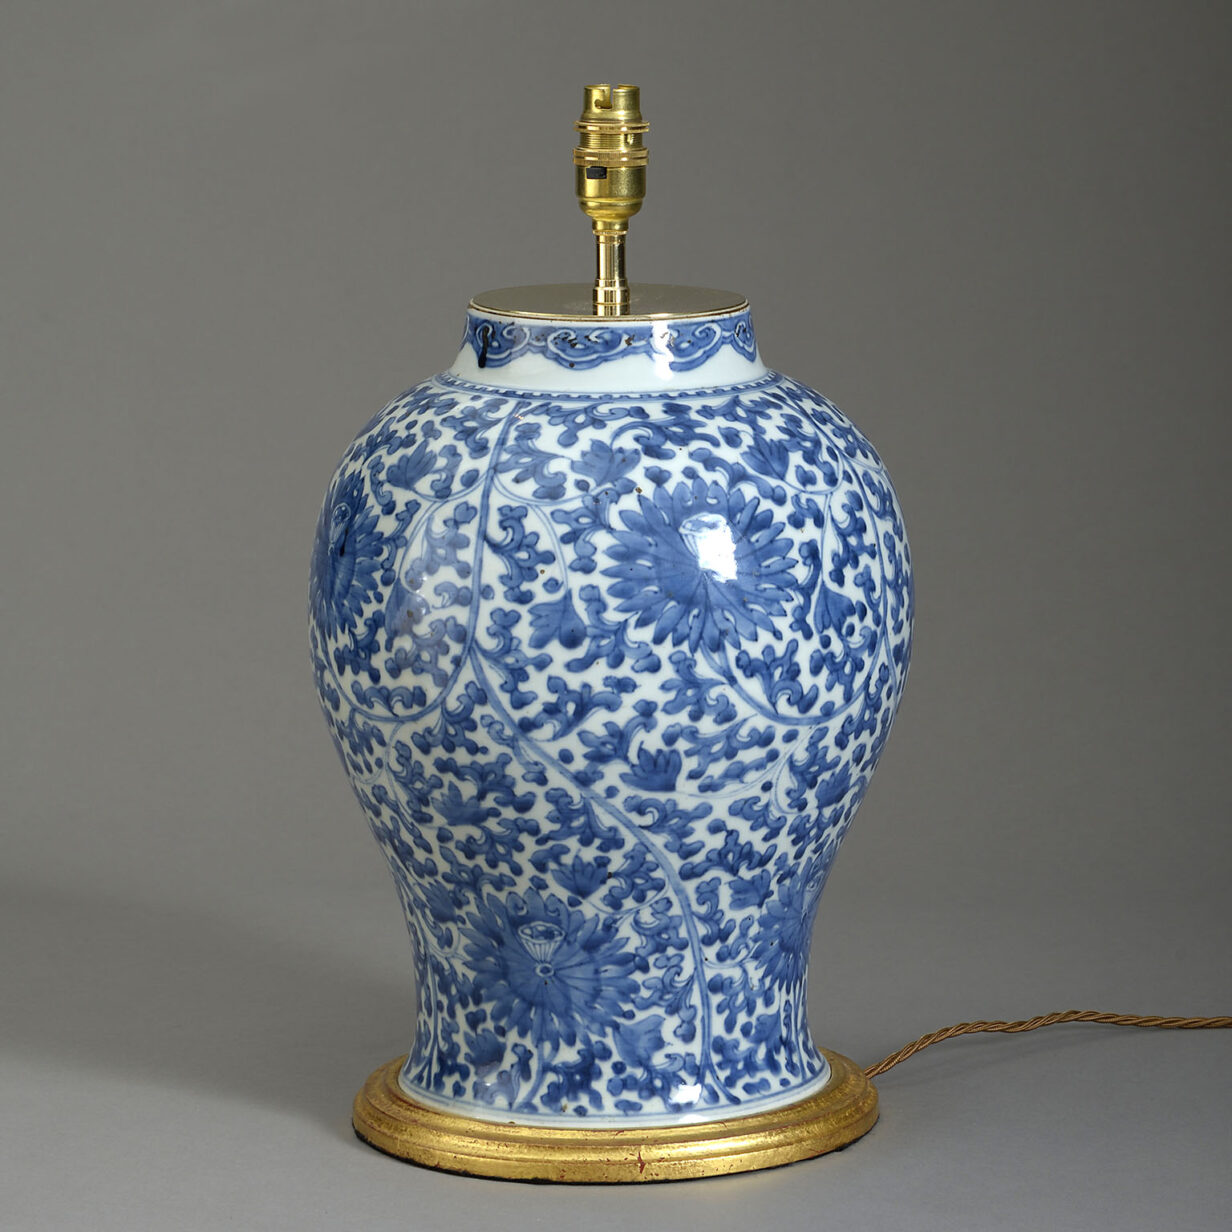 19th Century Blue & White Porcelain Vase in the Kangxi Taste as a Lamp